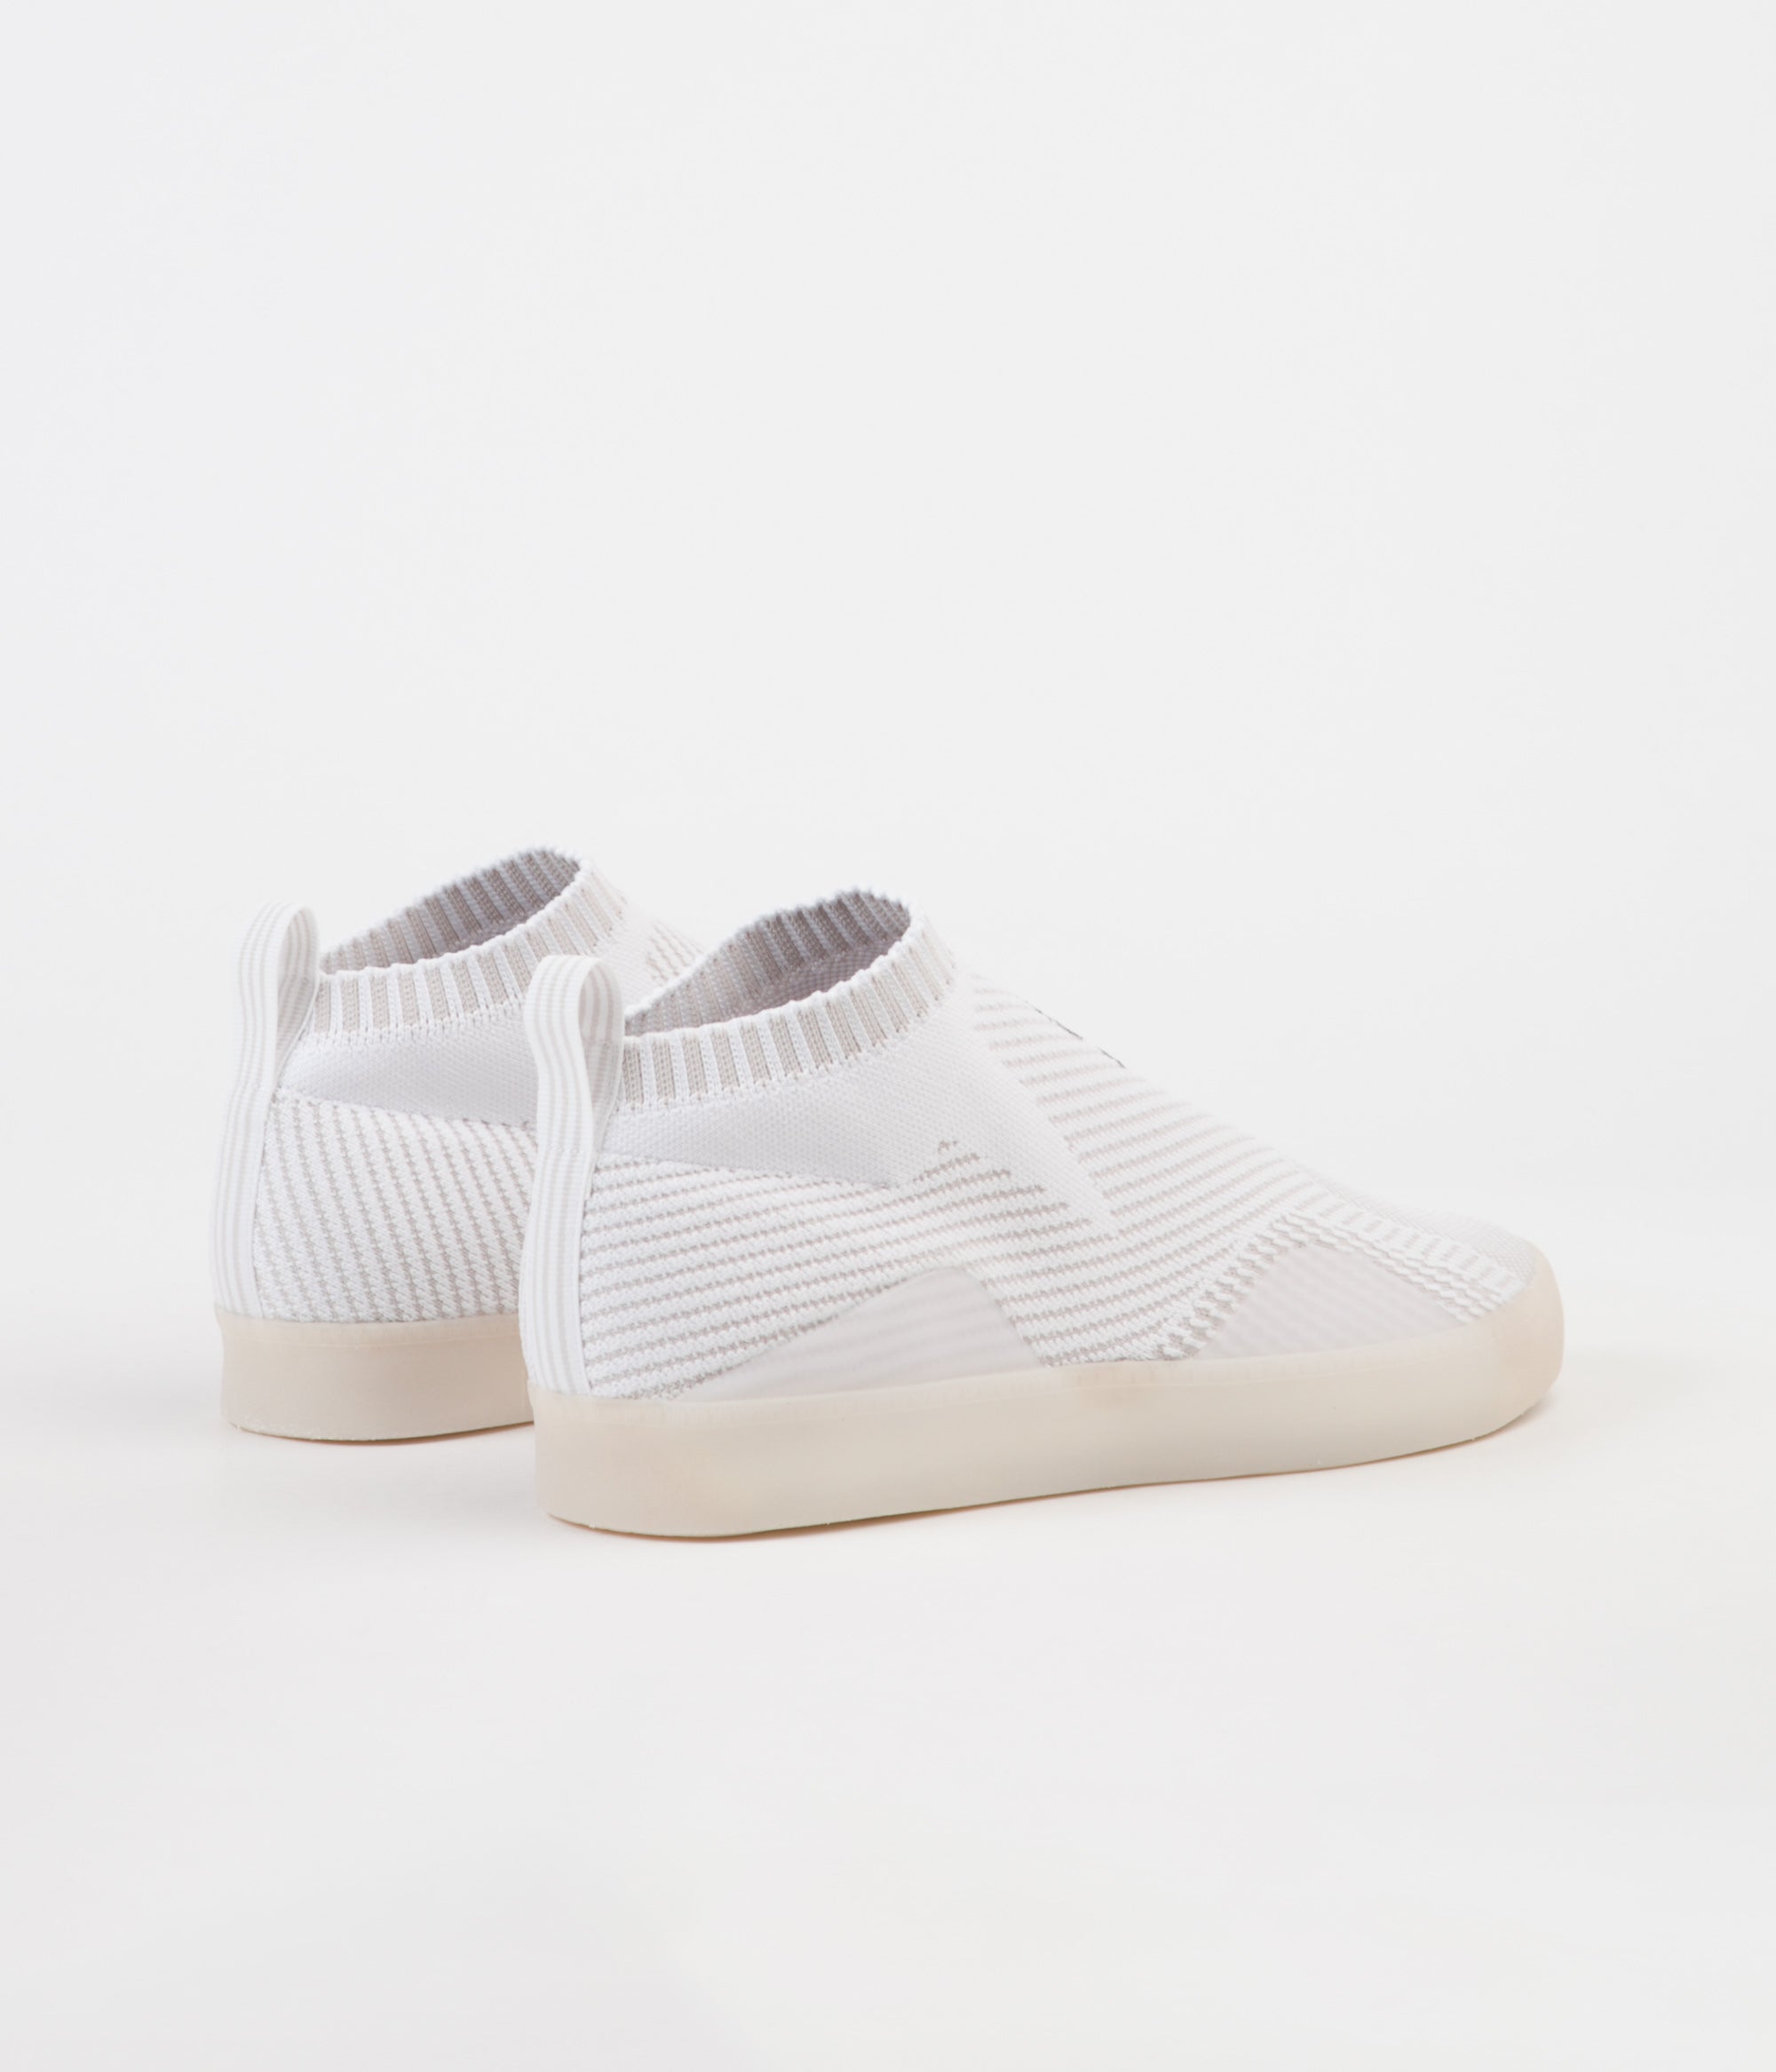 Adidas 3ST.002 Primeknit Shoes - White 